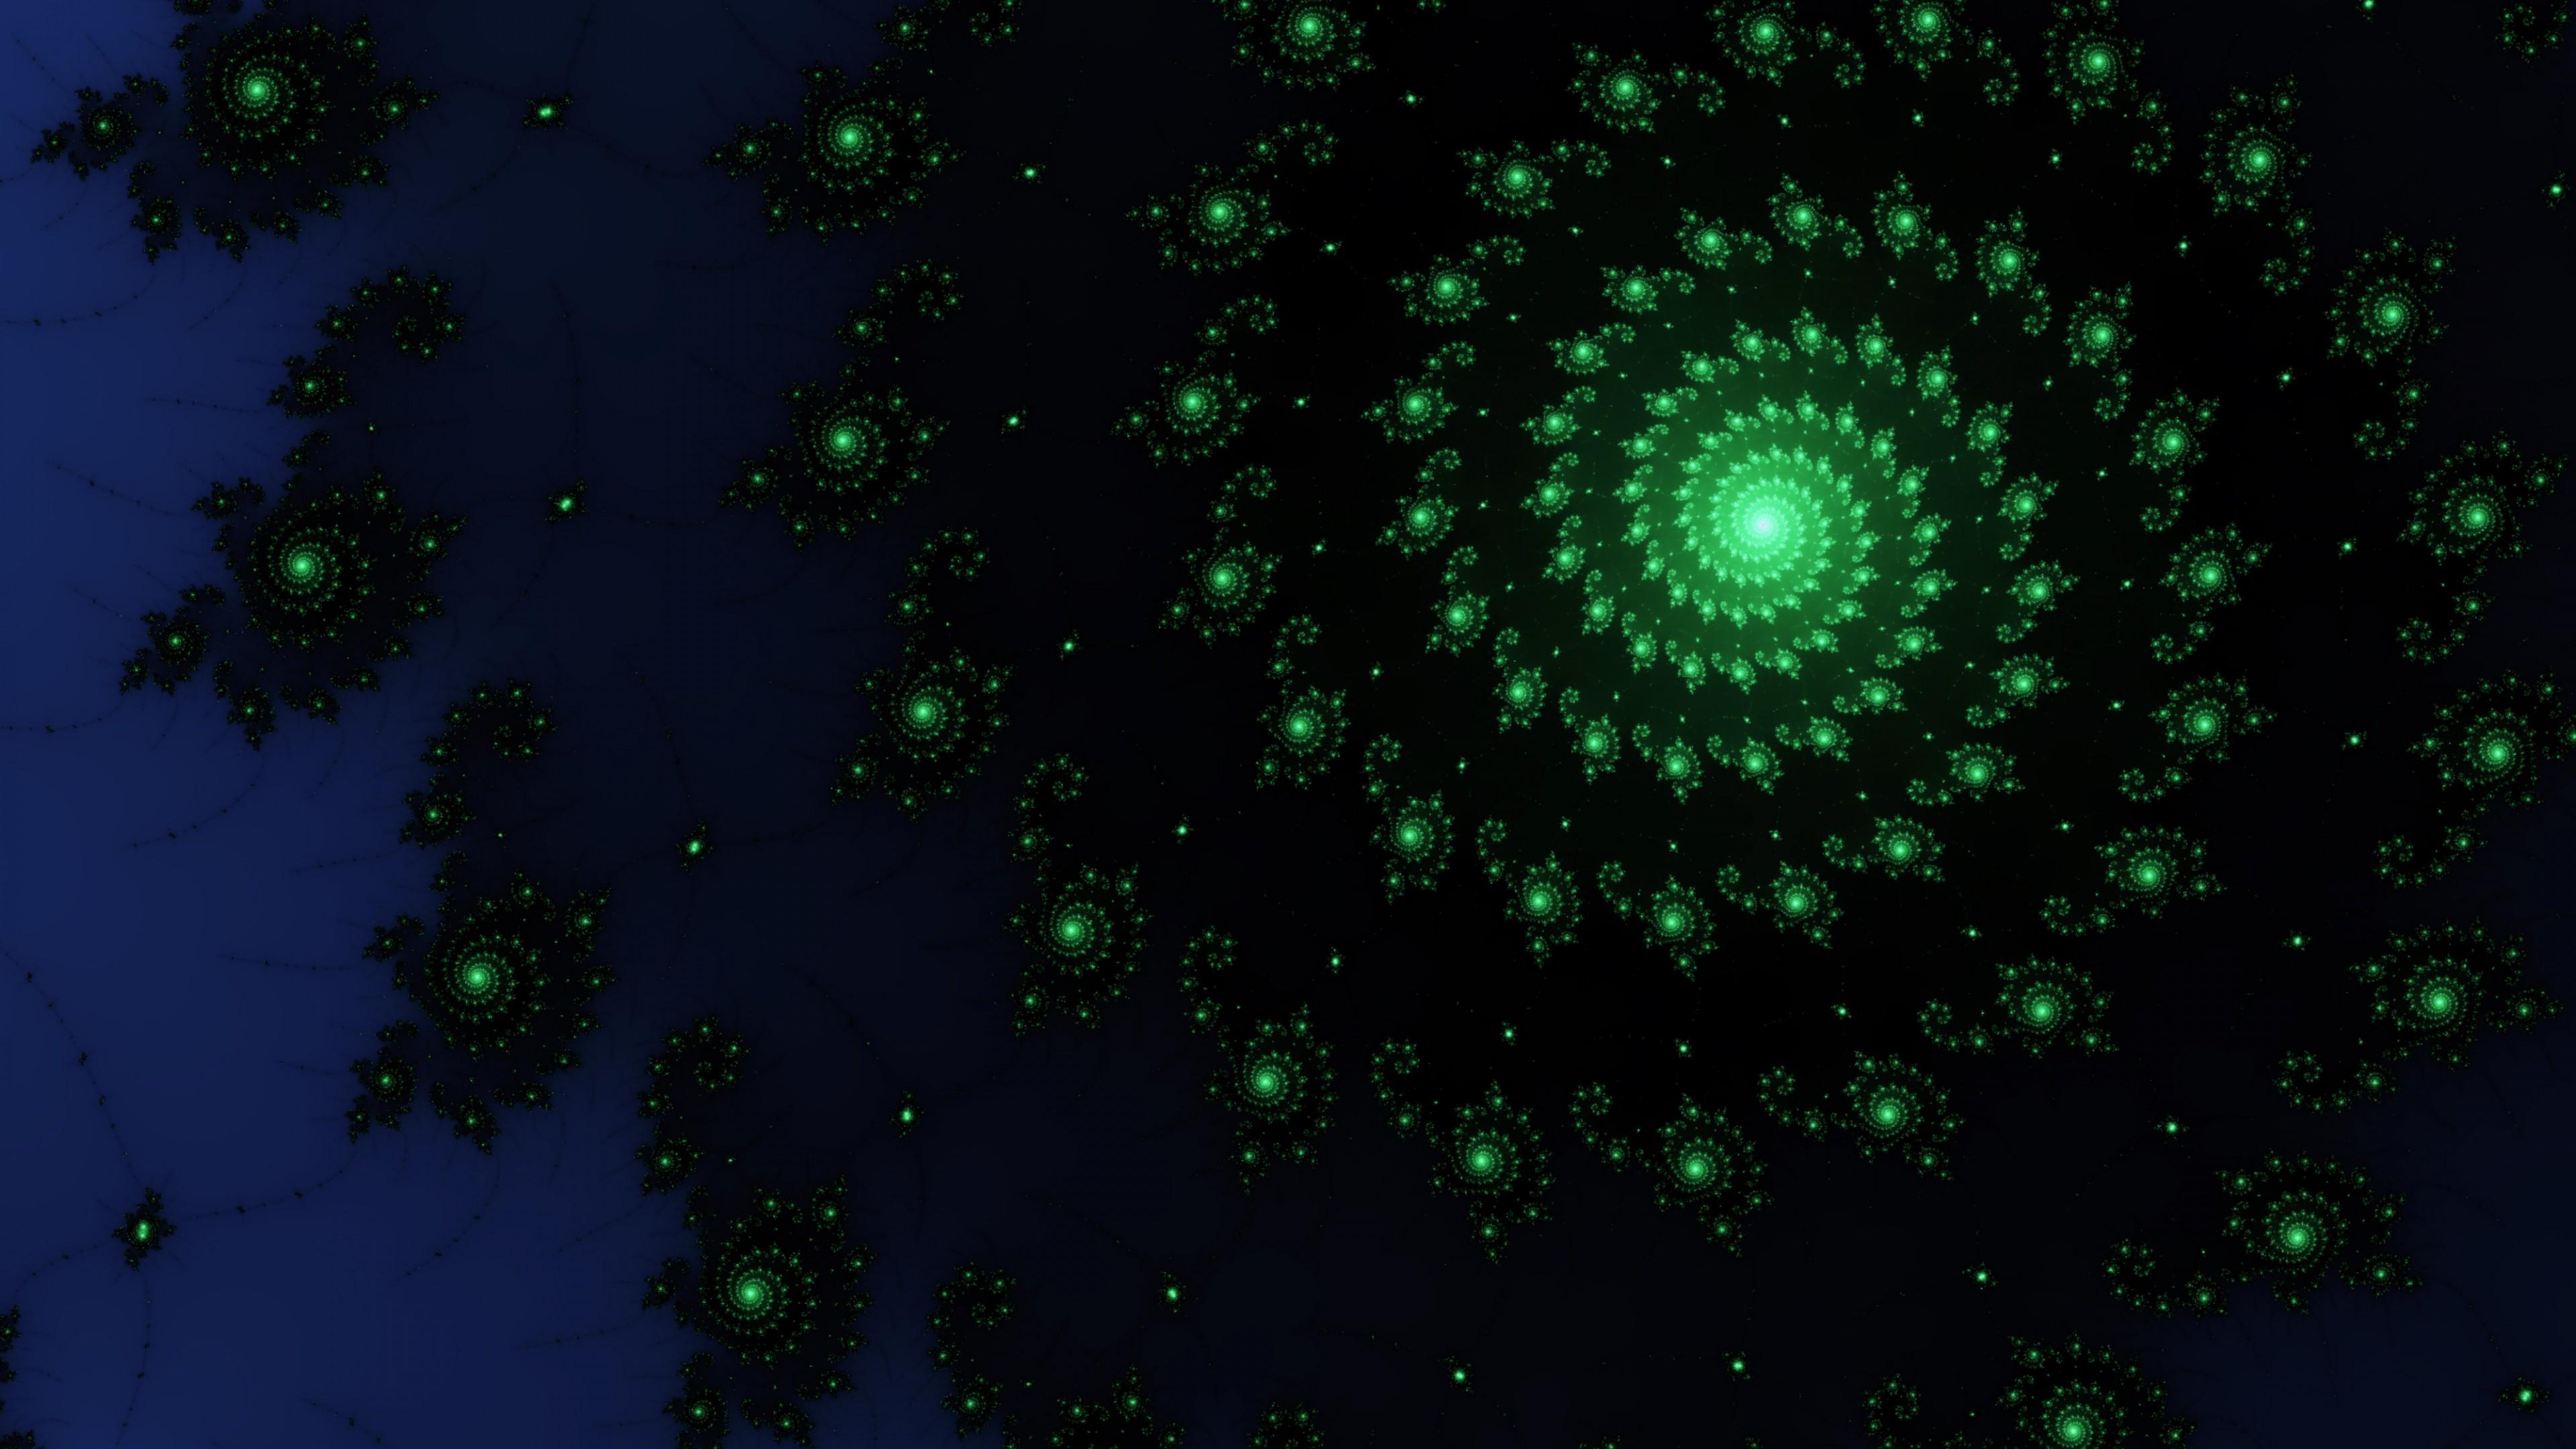 3D Green Spiral Galaxy Wallpaper for Desktop and Mobile 4K